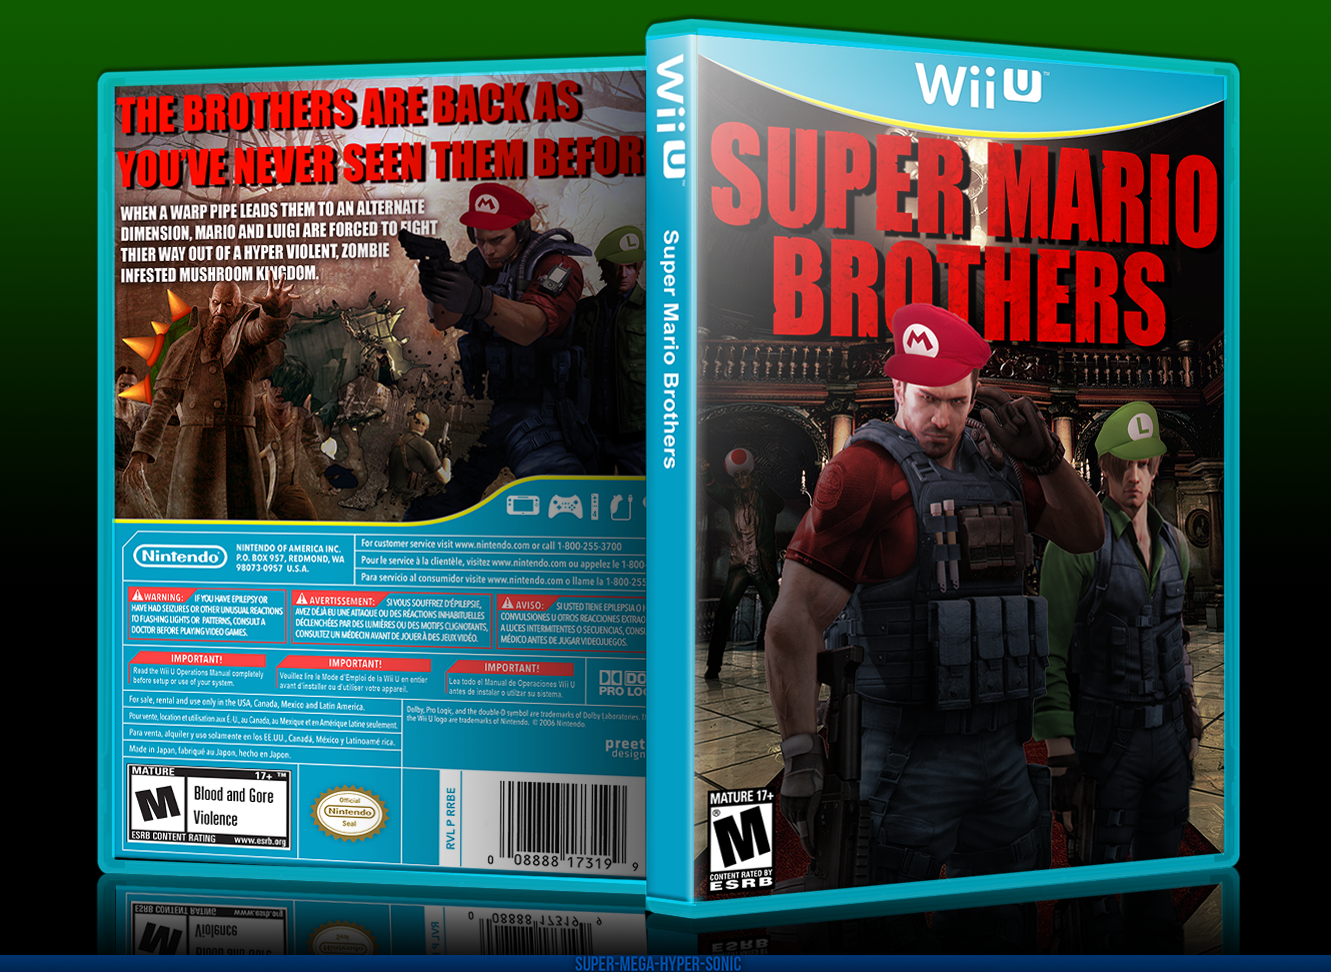 Super Mario Brothers box cover